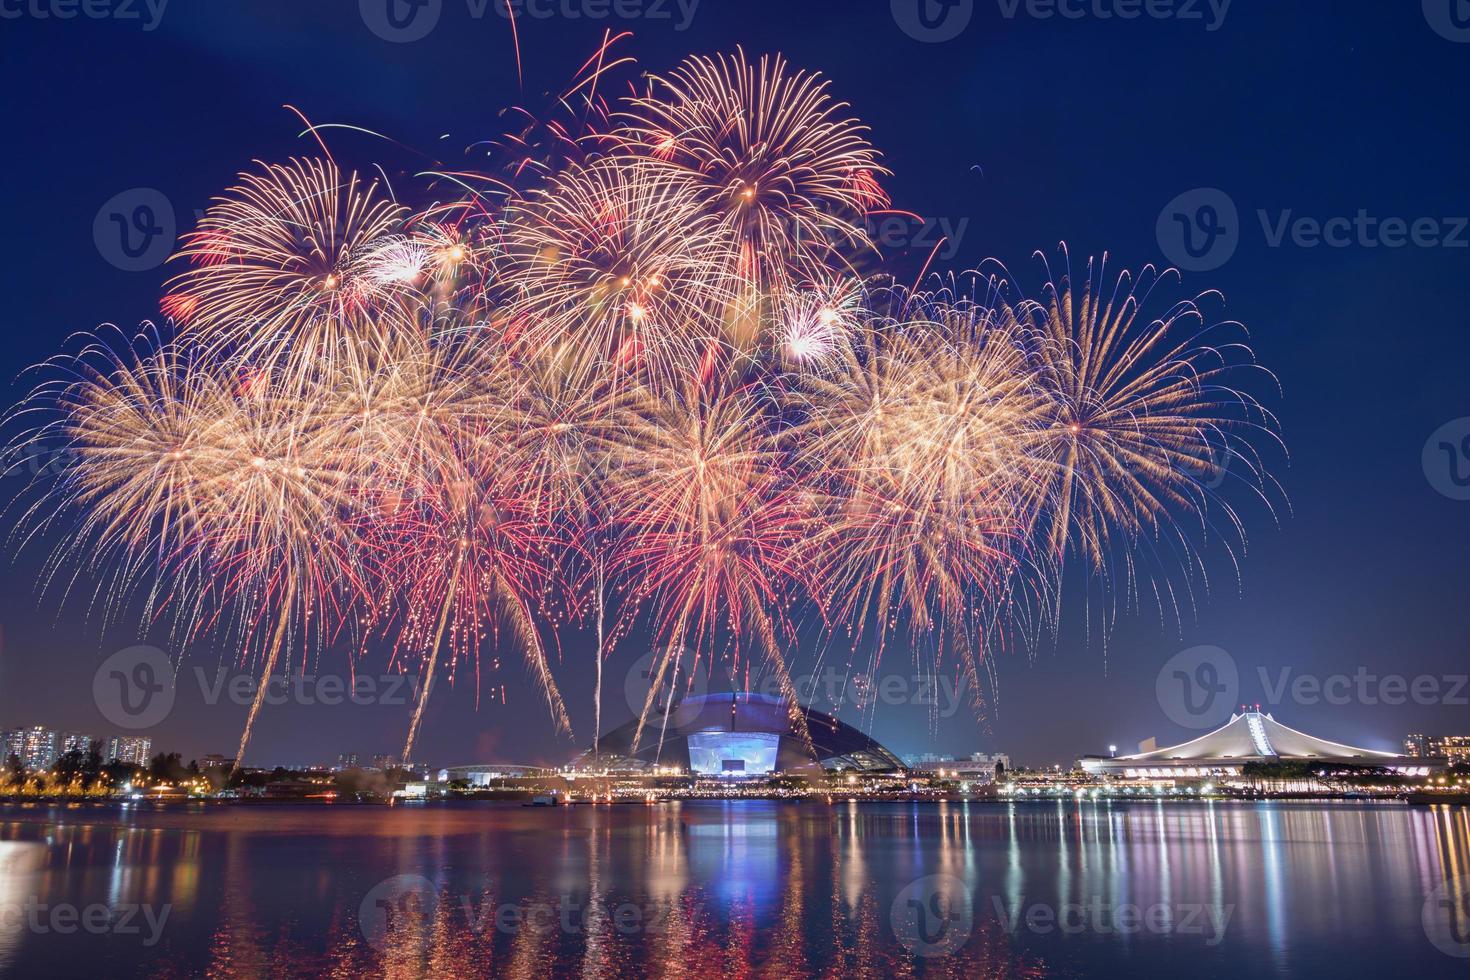 prachtig vuurwerk op de nationale feestdag van singapore foto